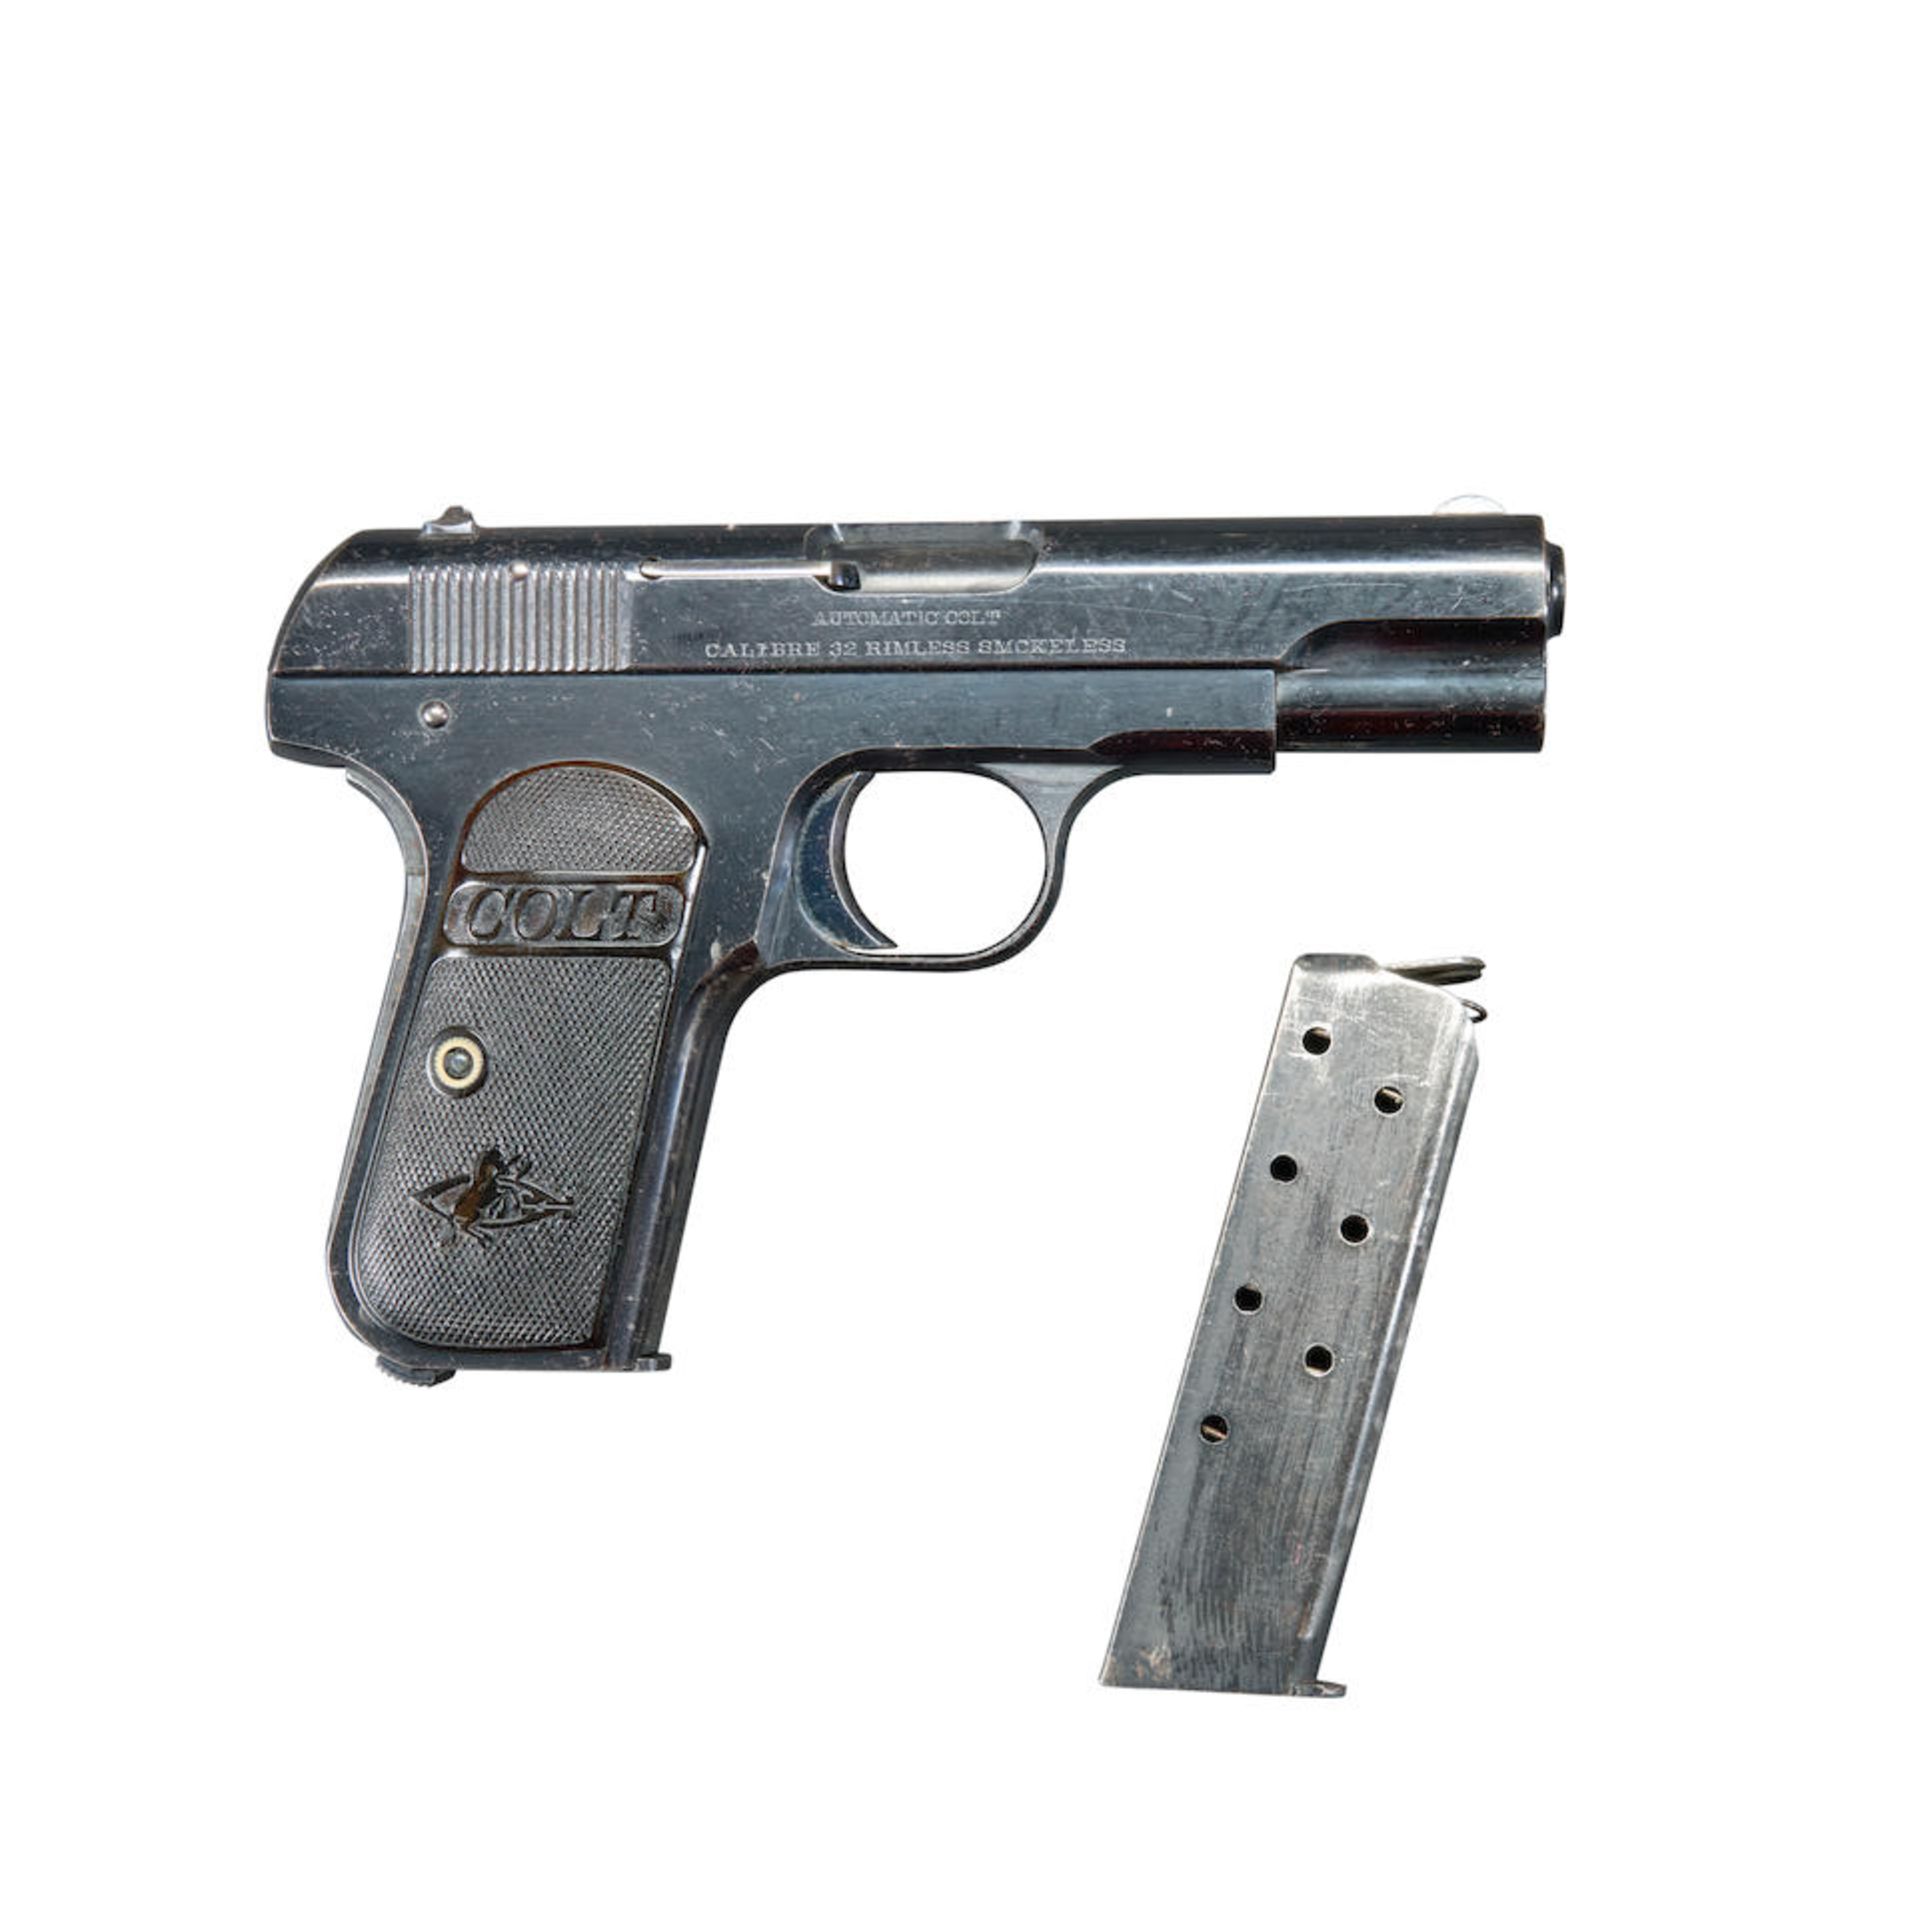 Colt Model 1903 Pocket Hammerless Semi-Automatic Pistol, Curio or Relic firearm